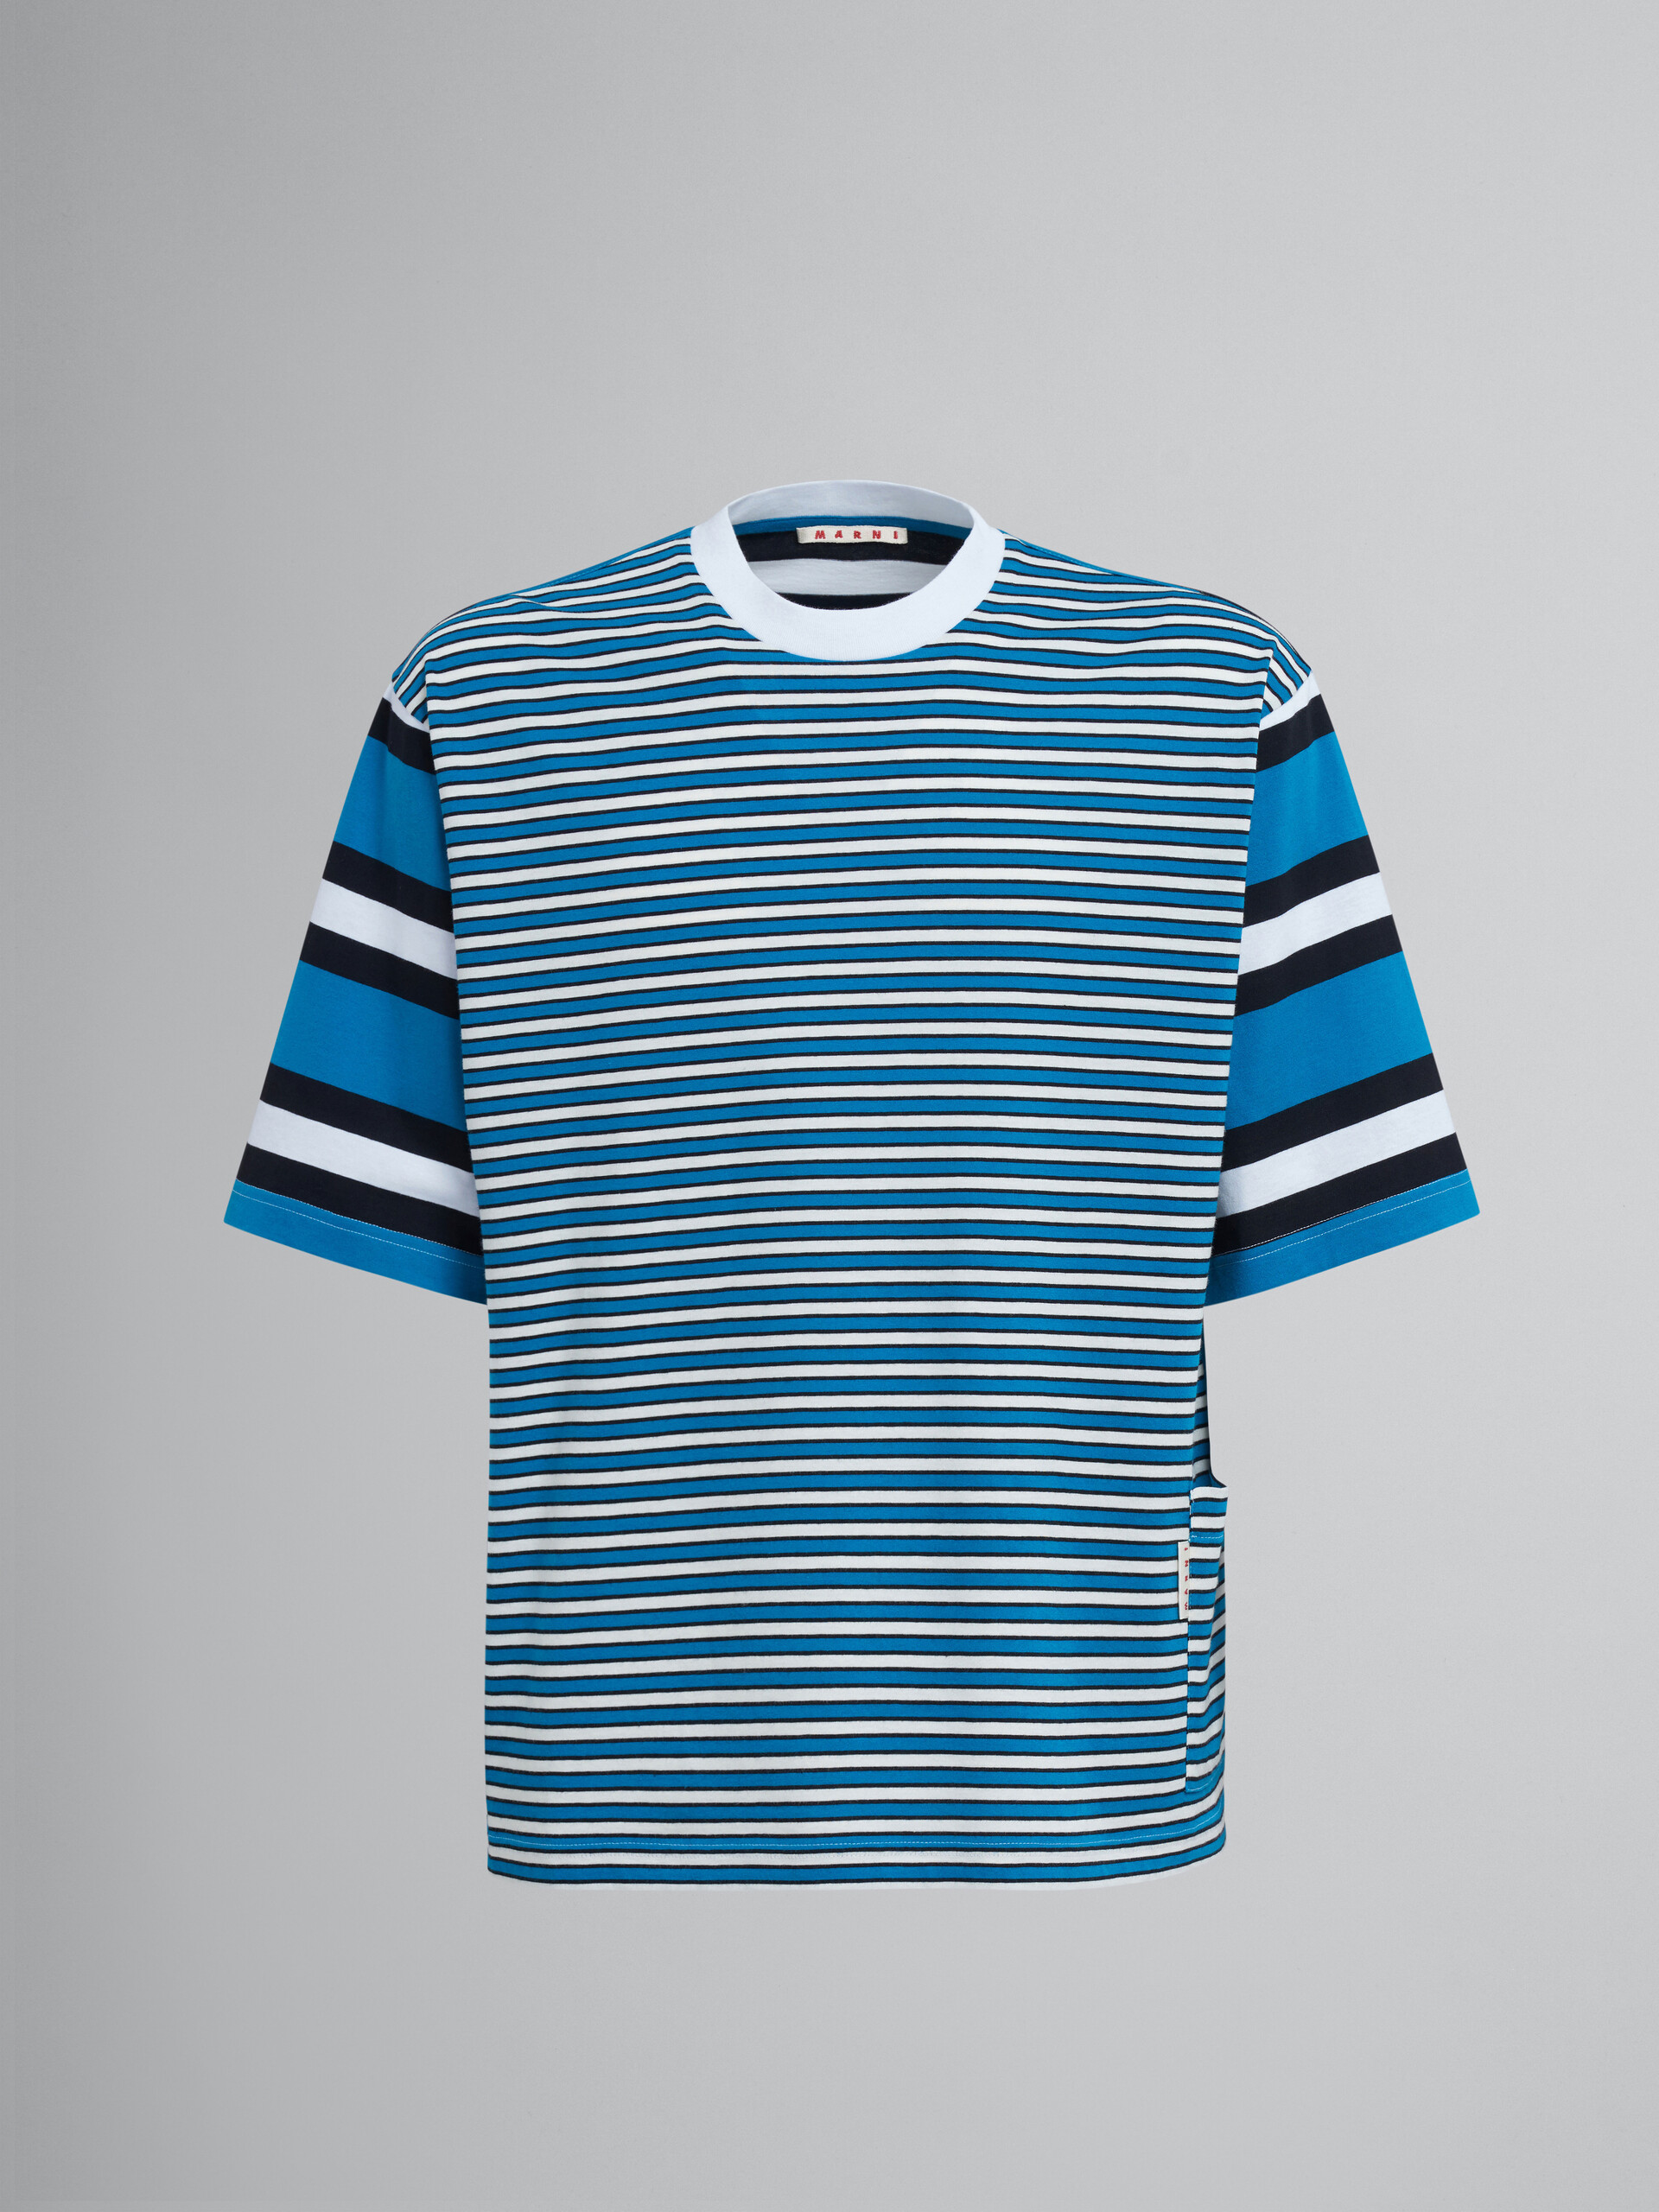 Blue striped cotton jersey crewneck T-shirt - T-shirts - Image 1